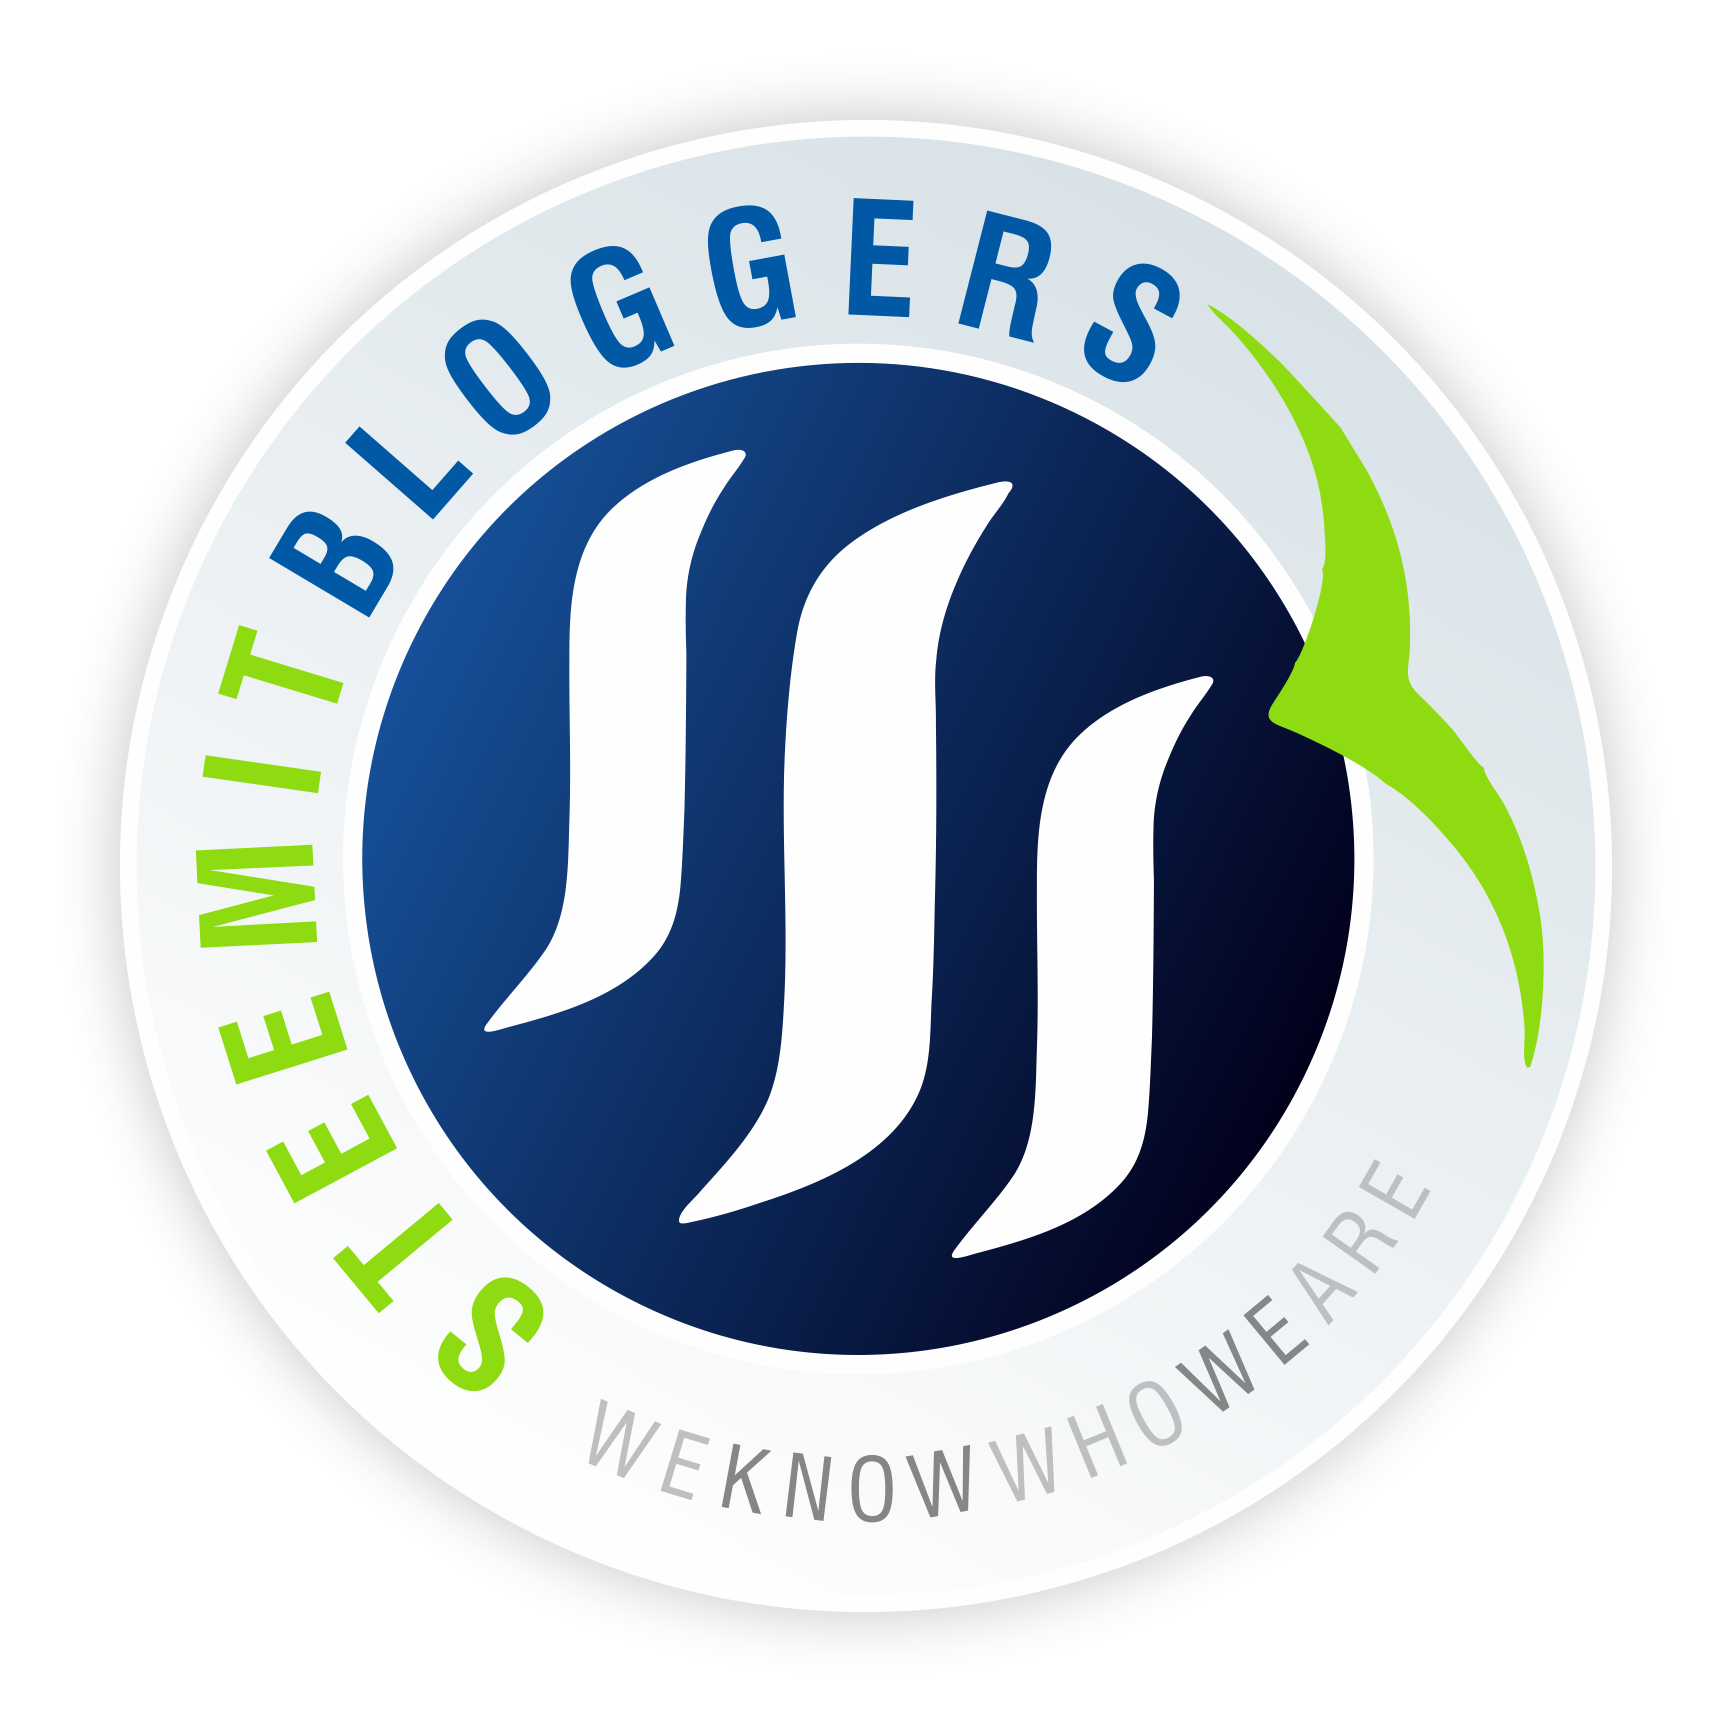 steemit bloggers logo.png